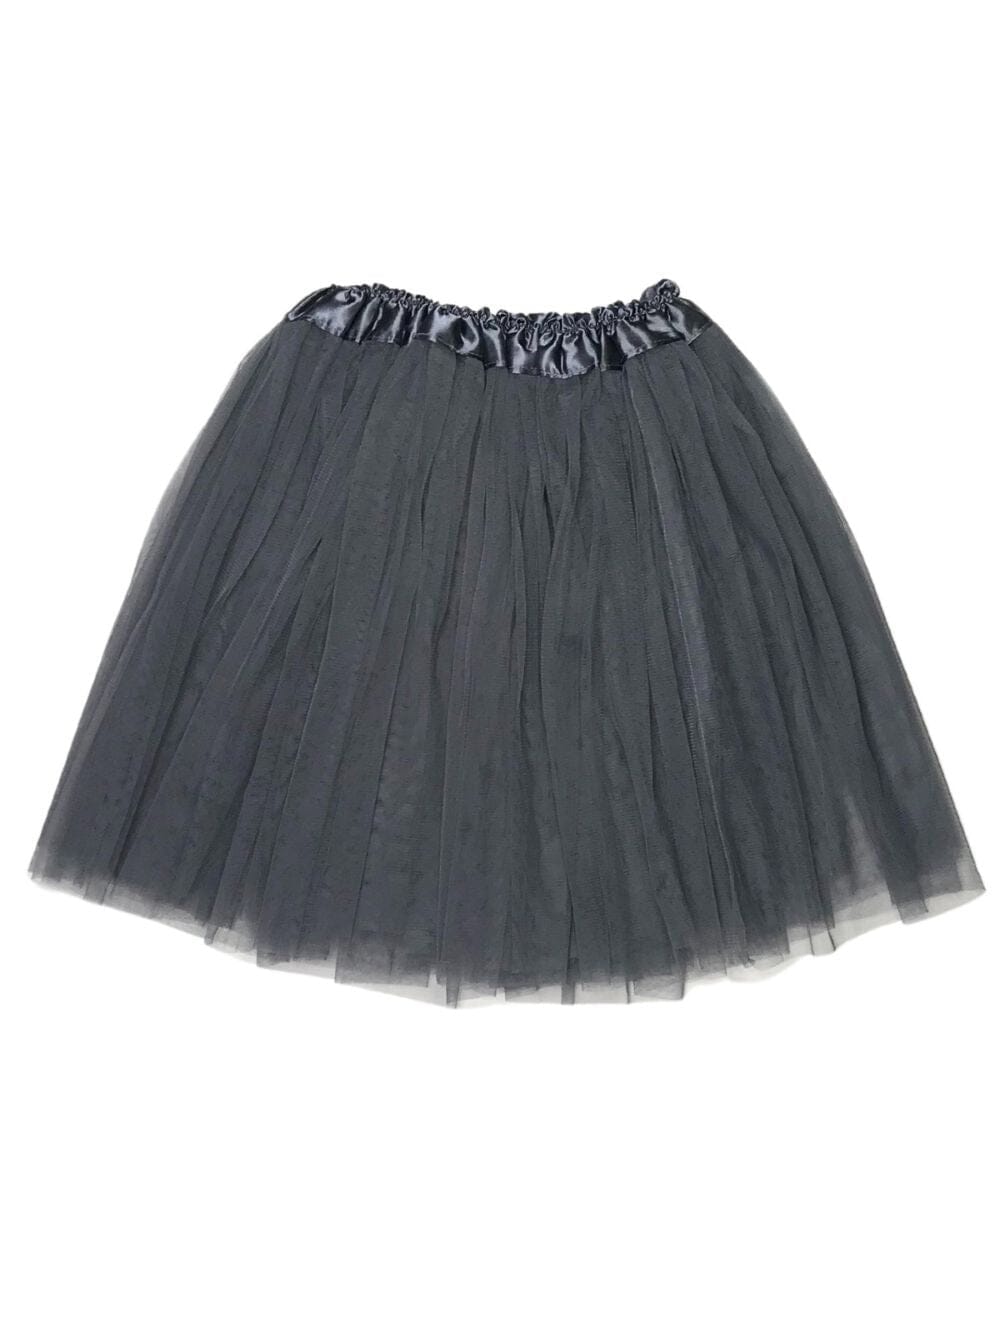 Dark Gray Plus Size Adult Tutu Skirt - Women's Plus Size 3- Layer Basic Ballet Costume Dance Tutus - Sydney So Sweet